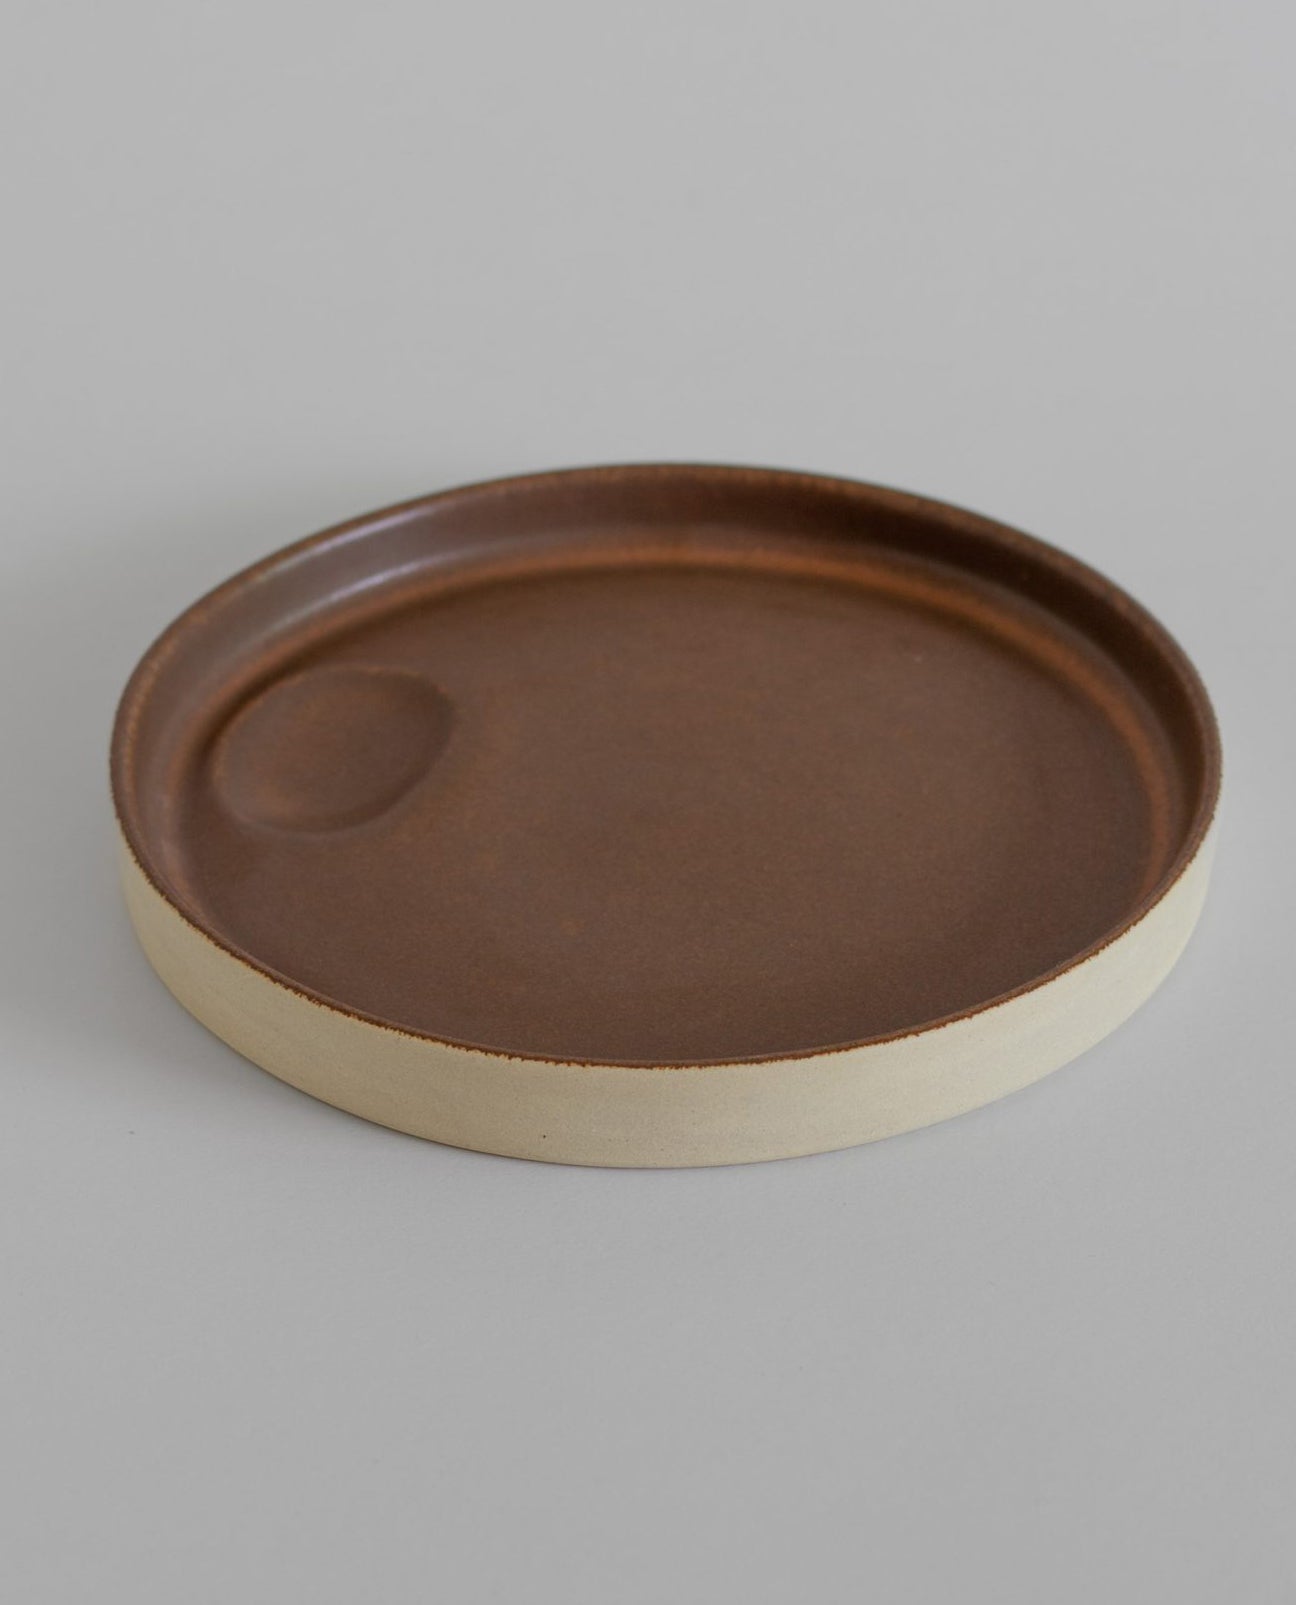 Olivinha-Ocactuu Side Plate in Natural / Brown